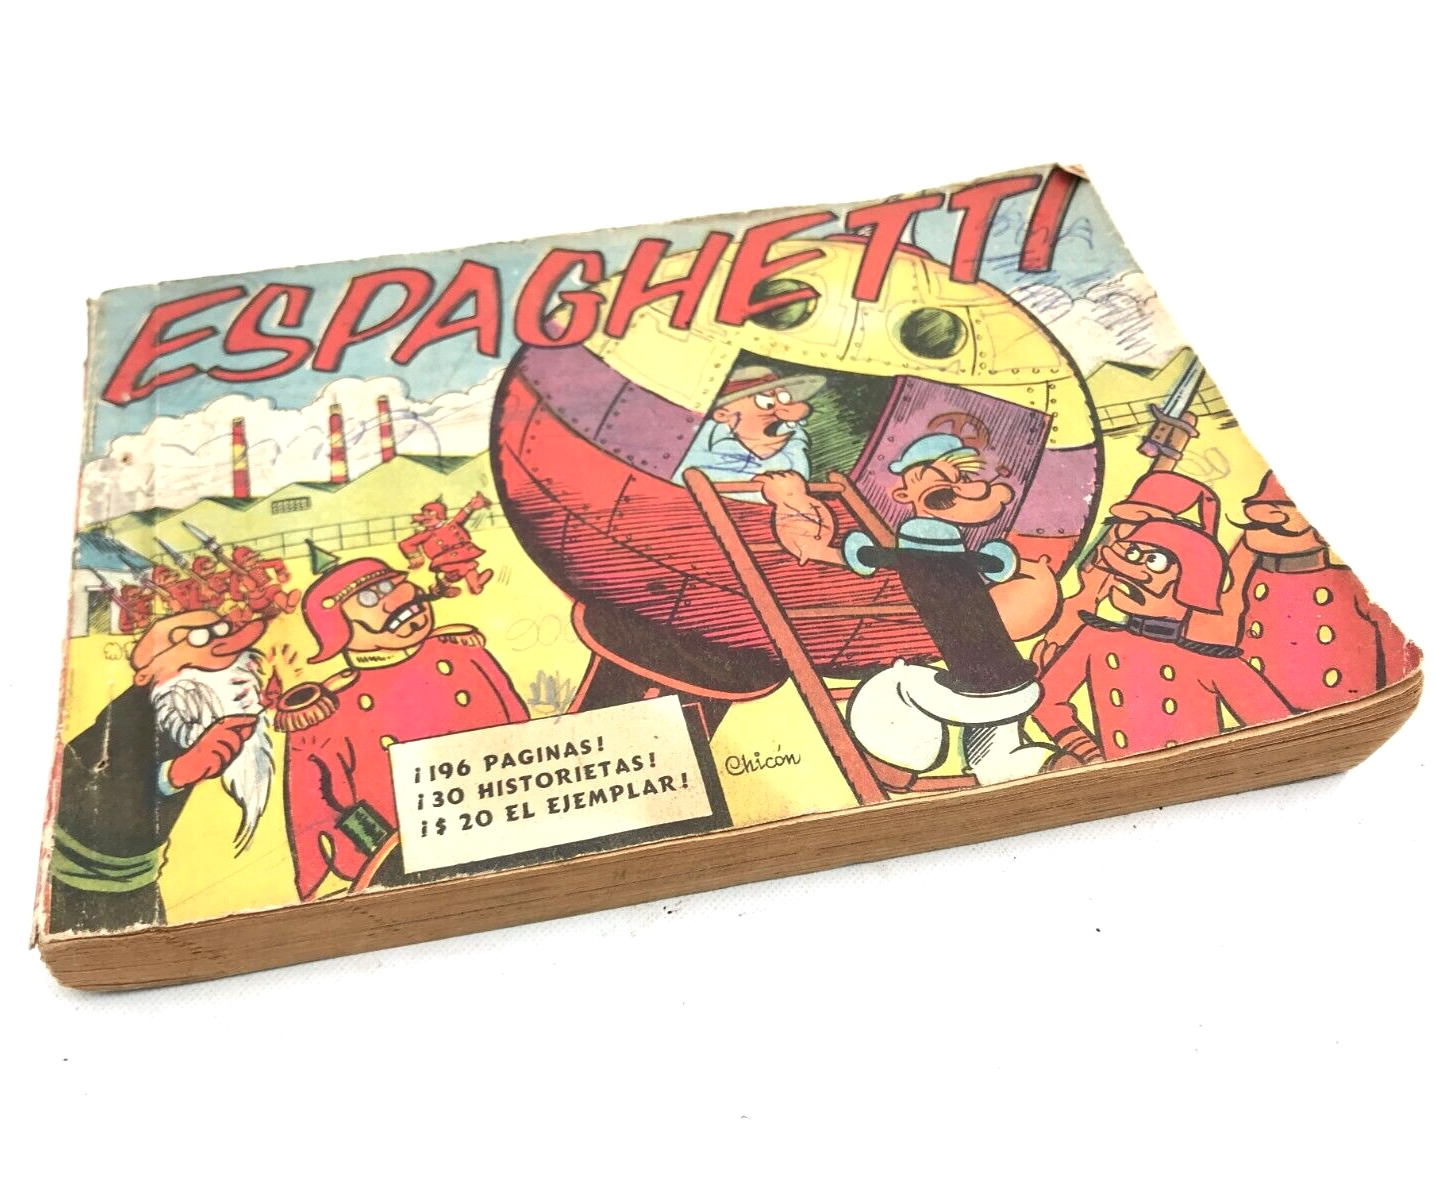 Popeye RARE Argentine Comic Book 1962 Spanish Edition ESPAGHETTI #1 Pickelhaube